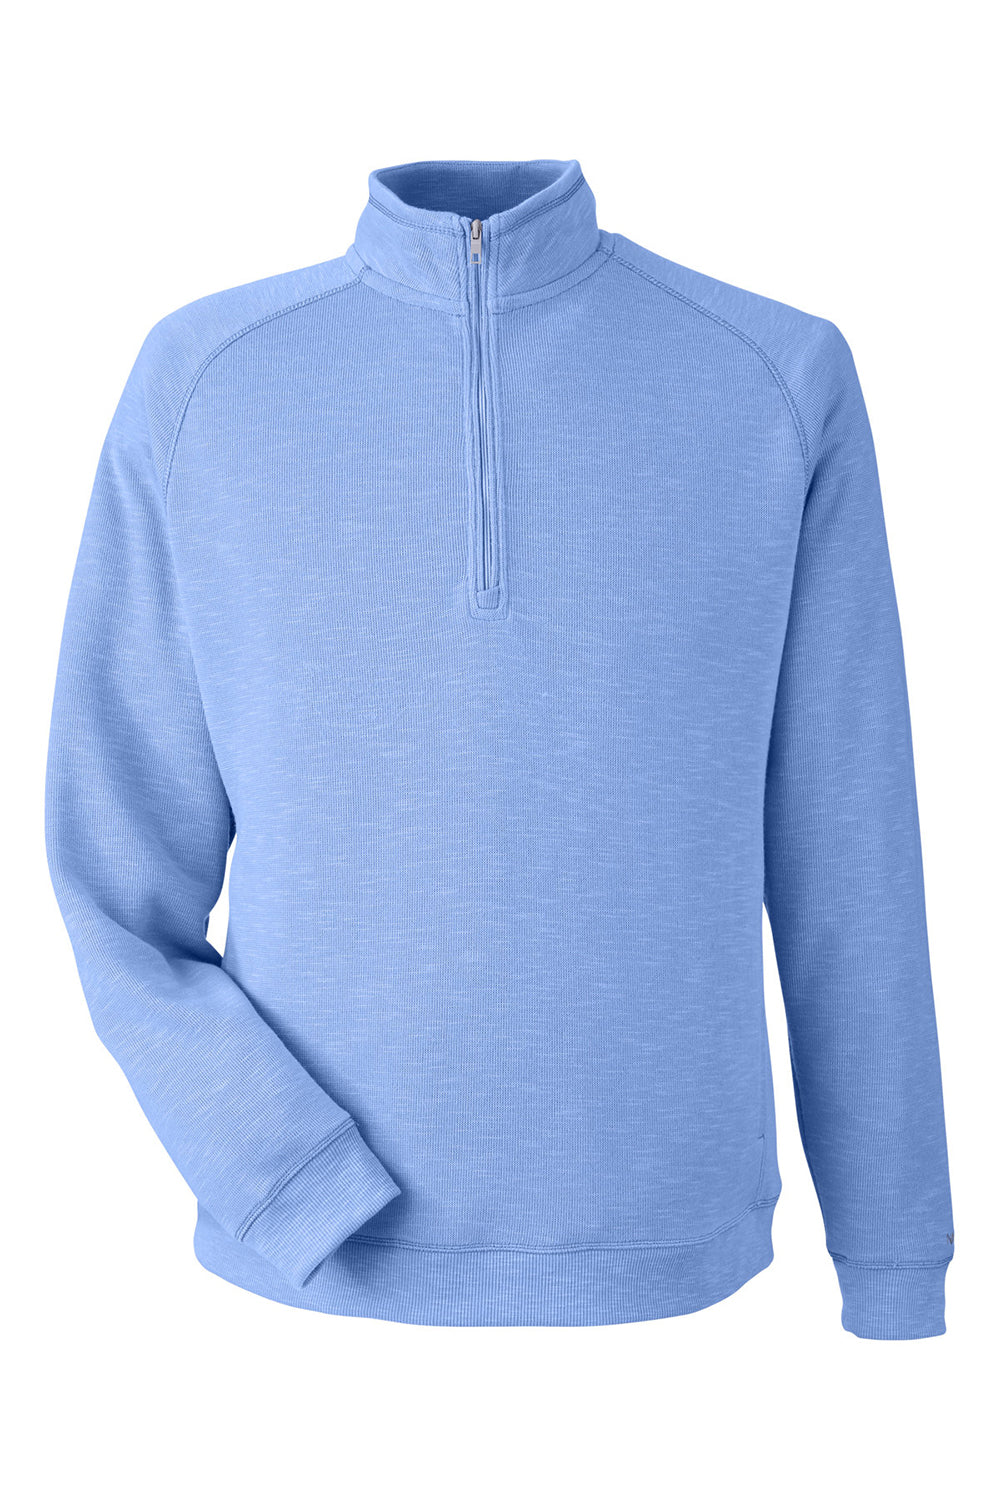 Nautica N17991 Mens Sun Surfer Supreme 1/4 Zip Sweatshirt Vintage Mavi Blue Flat Front